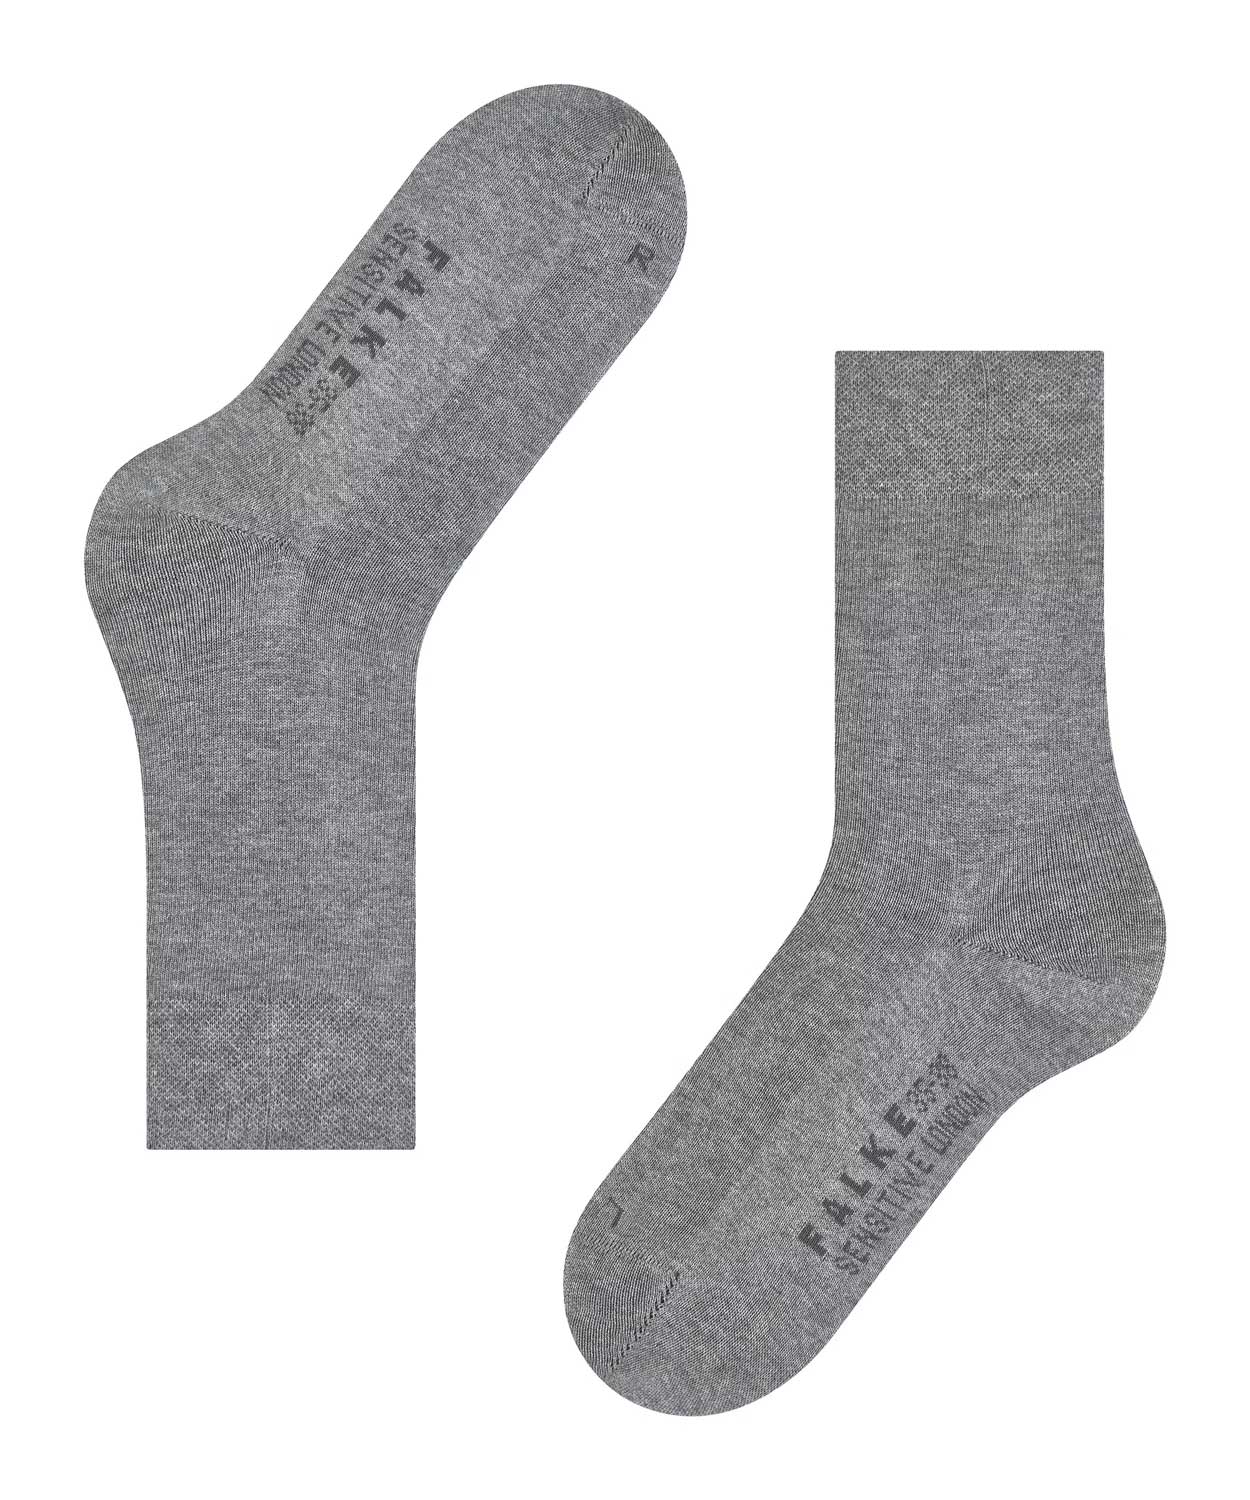 Socks - Sensitive London - Women